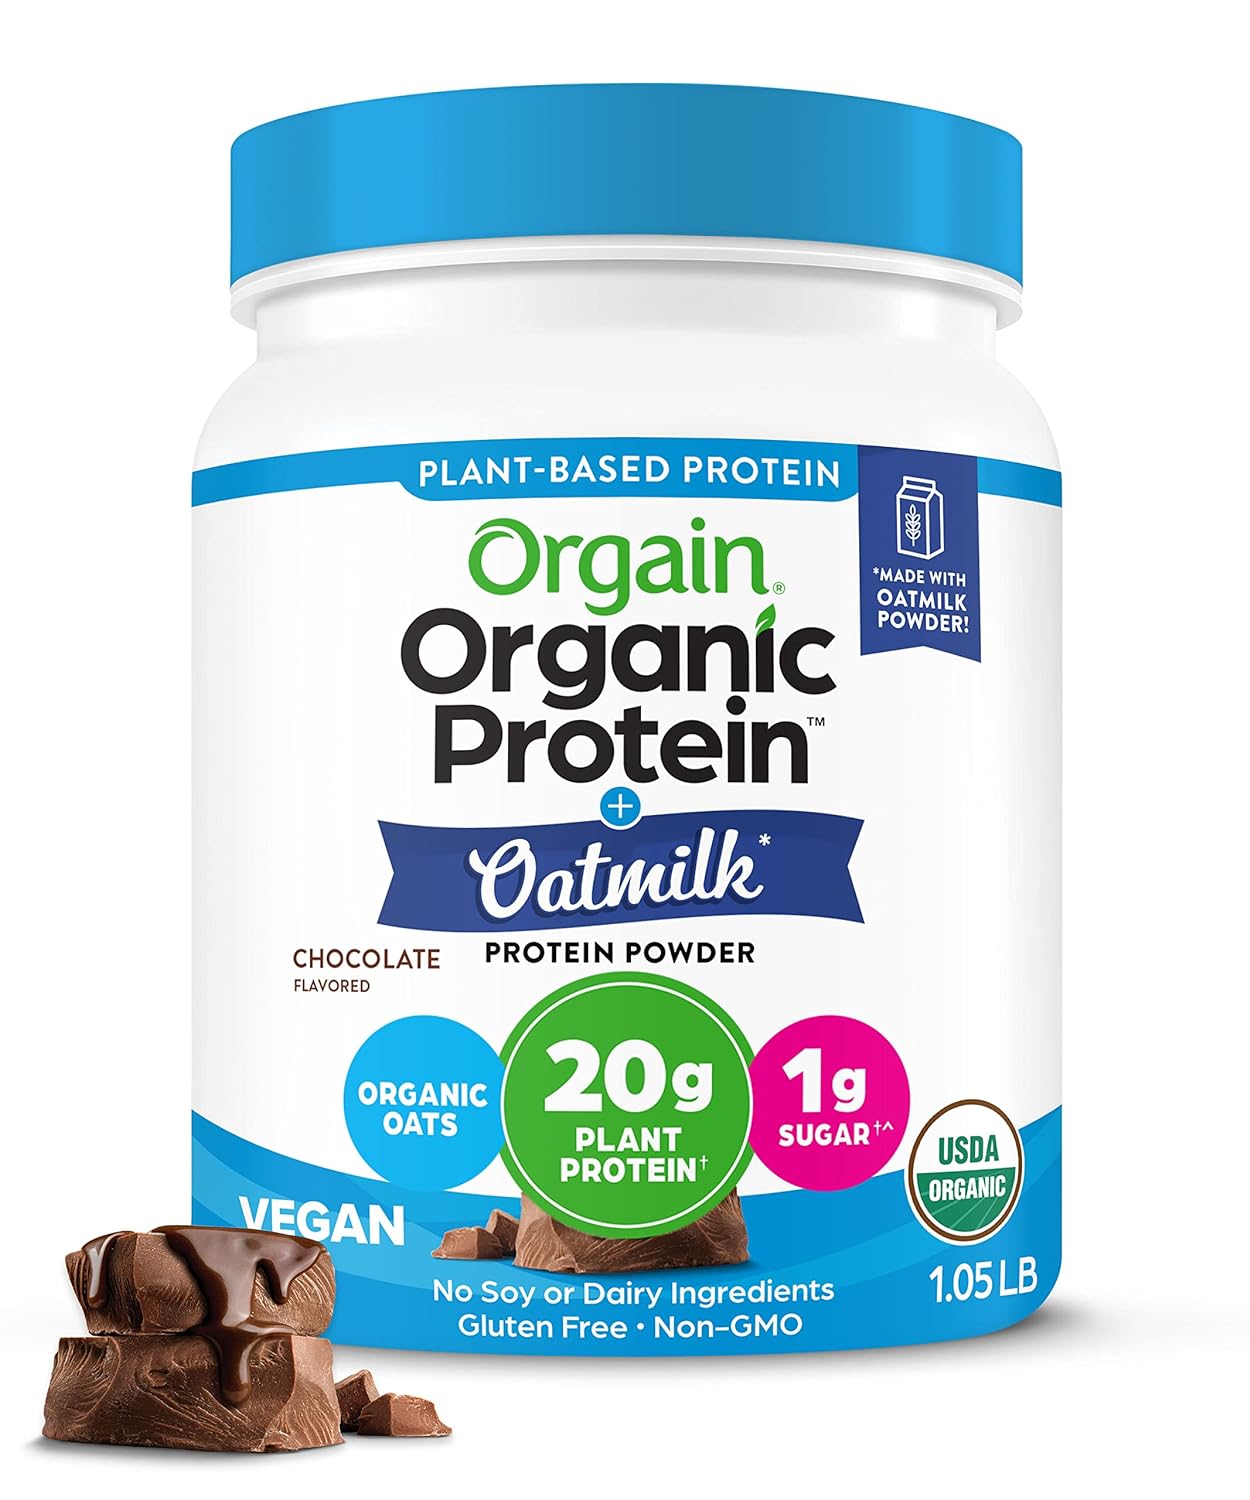 Orgain Organic Vegan Protein Powder + Oat Milk, Chocolate - 20g Plant